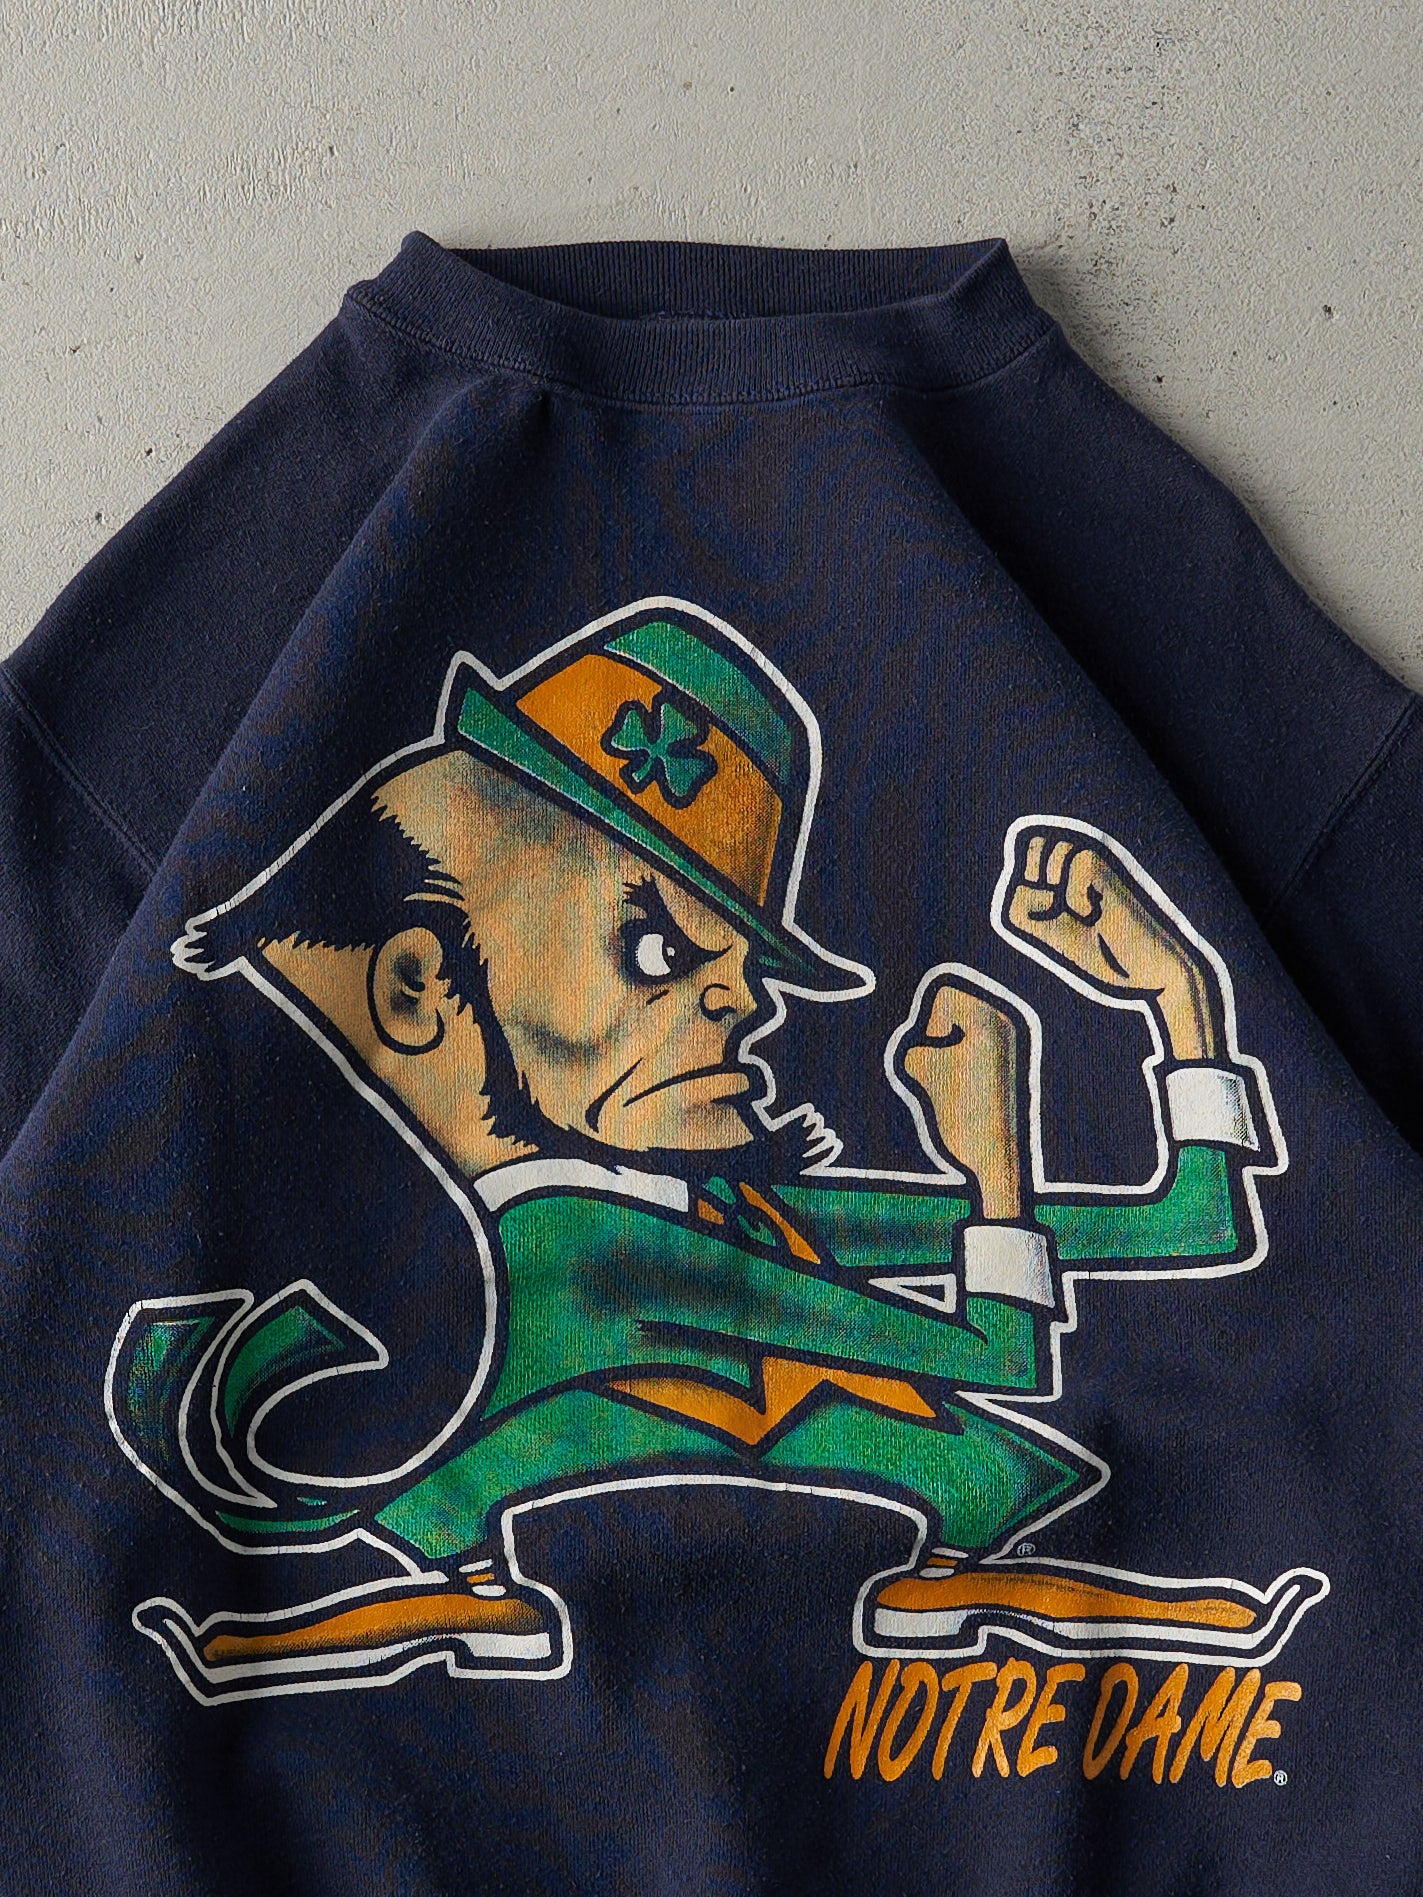 Vintage 90s Navy Blue Notre Dame Fighting Irish Crewneck (S)